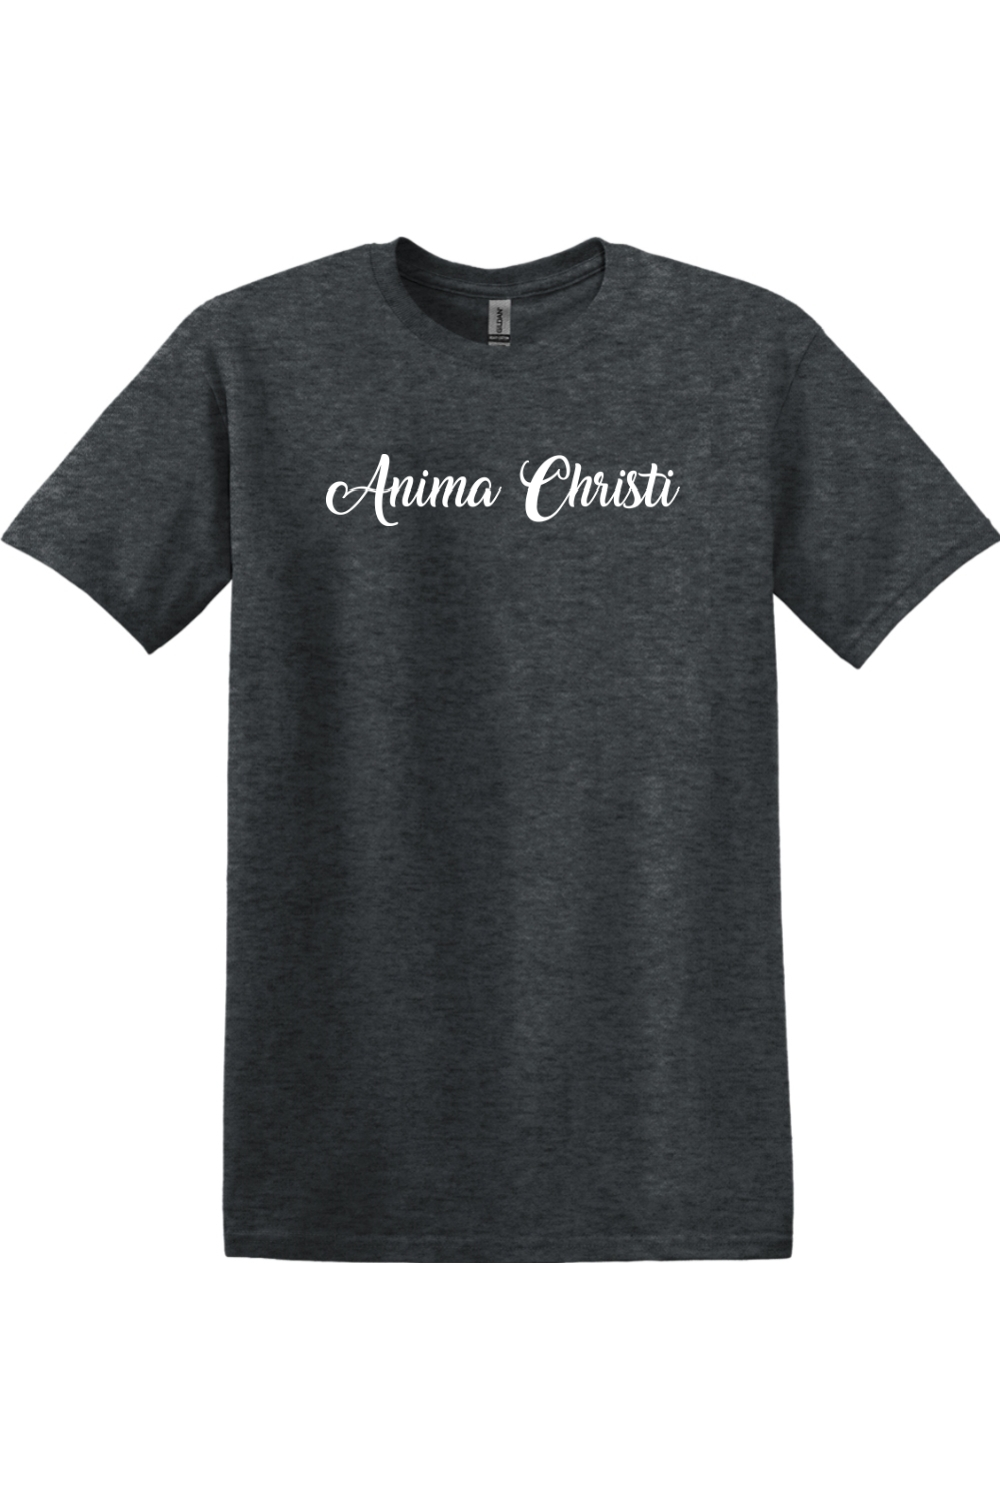 Eucharistic Revival Paint the City Anima Christi T-Shirt